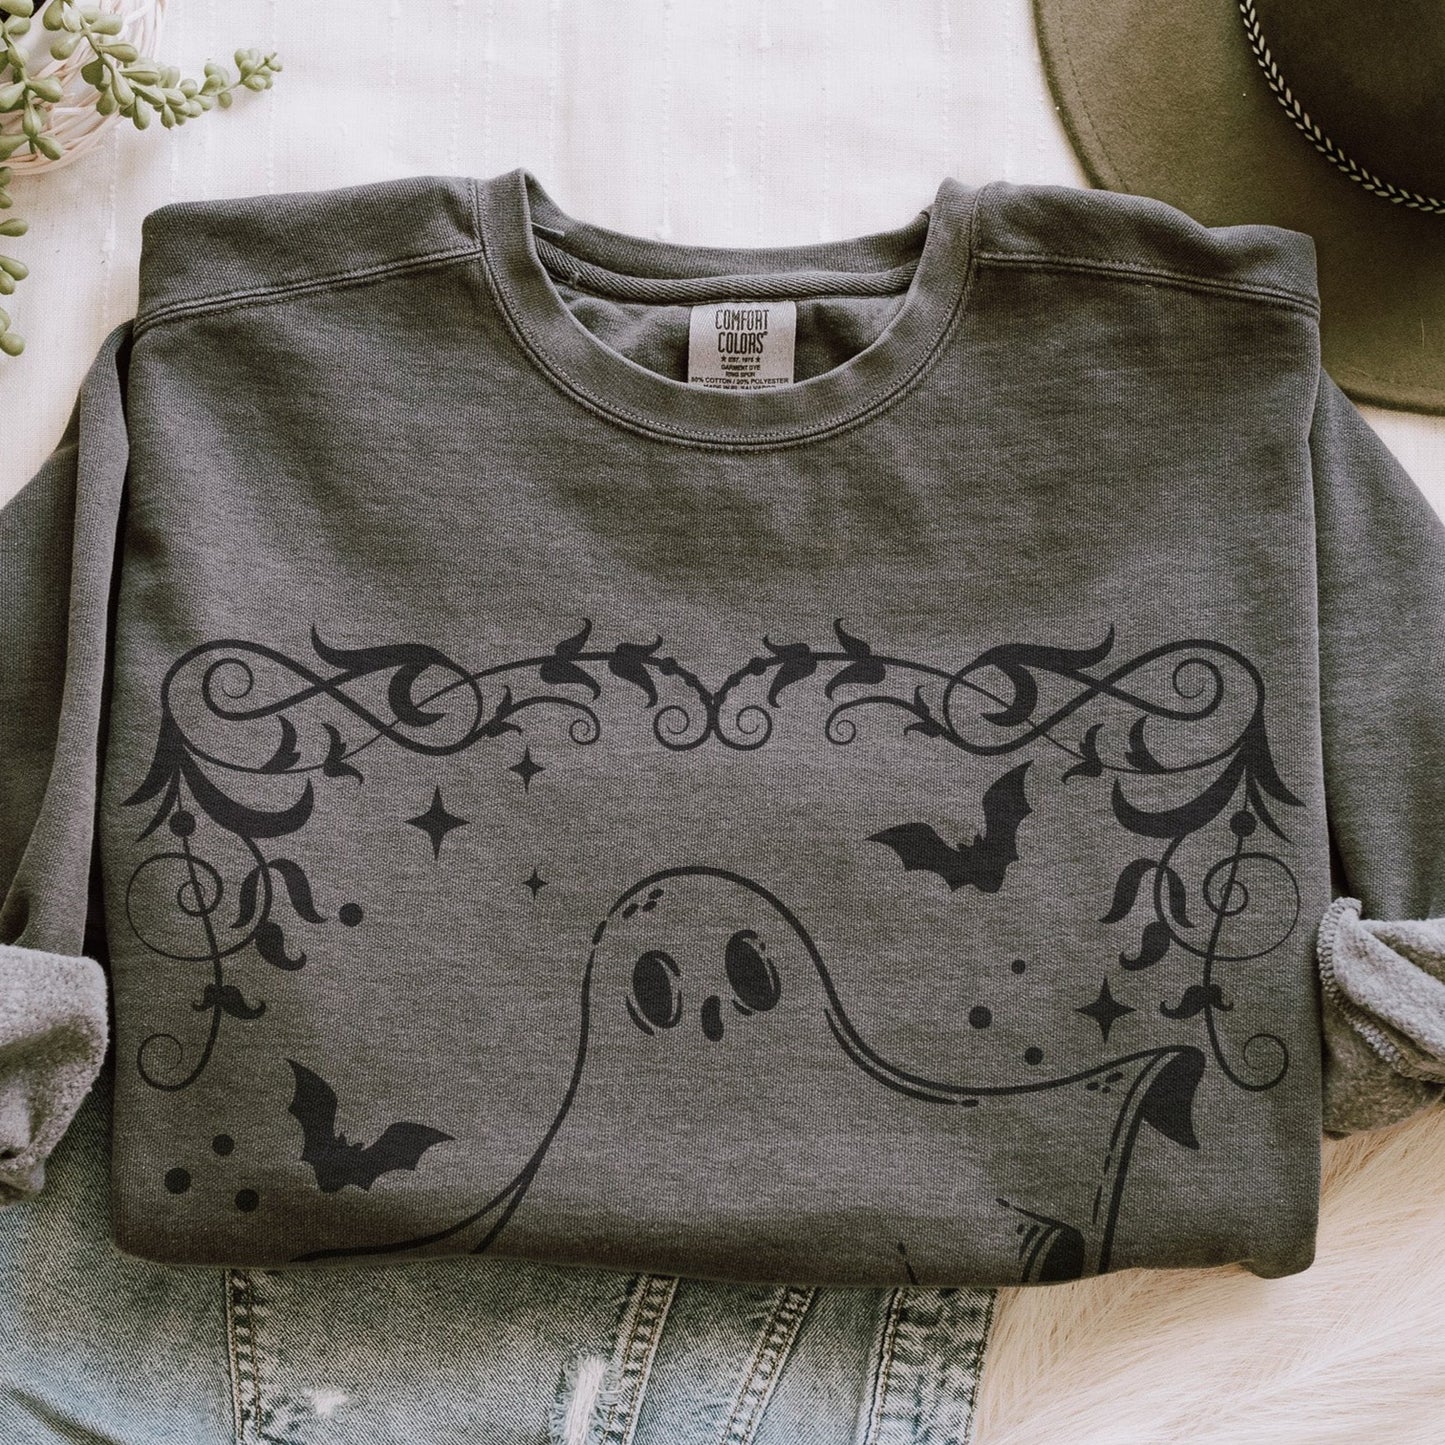 Spooky Ghost and Bats Comfort Colors Sweatshirt - Esdee